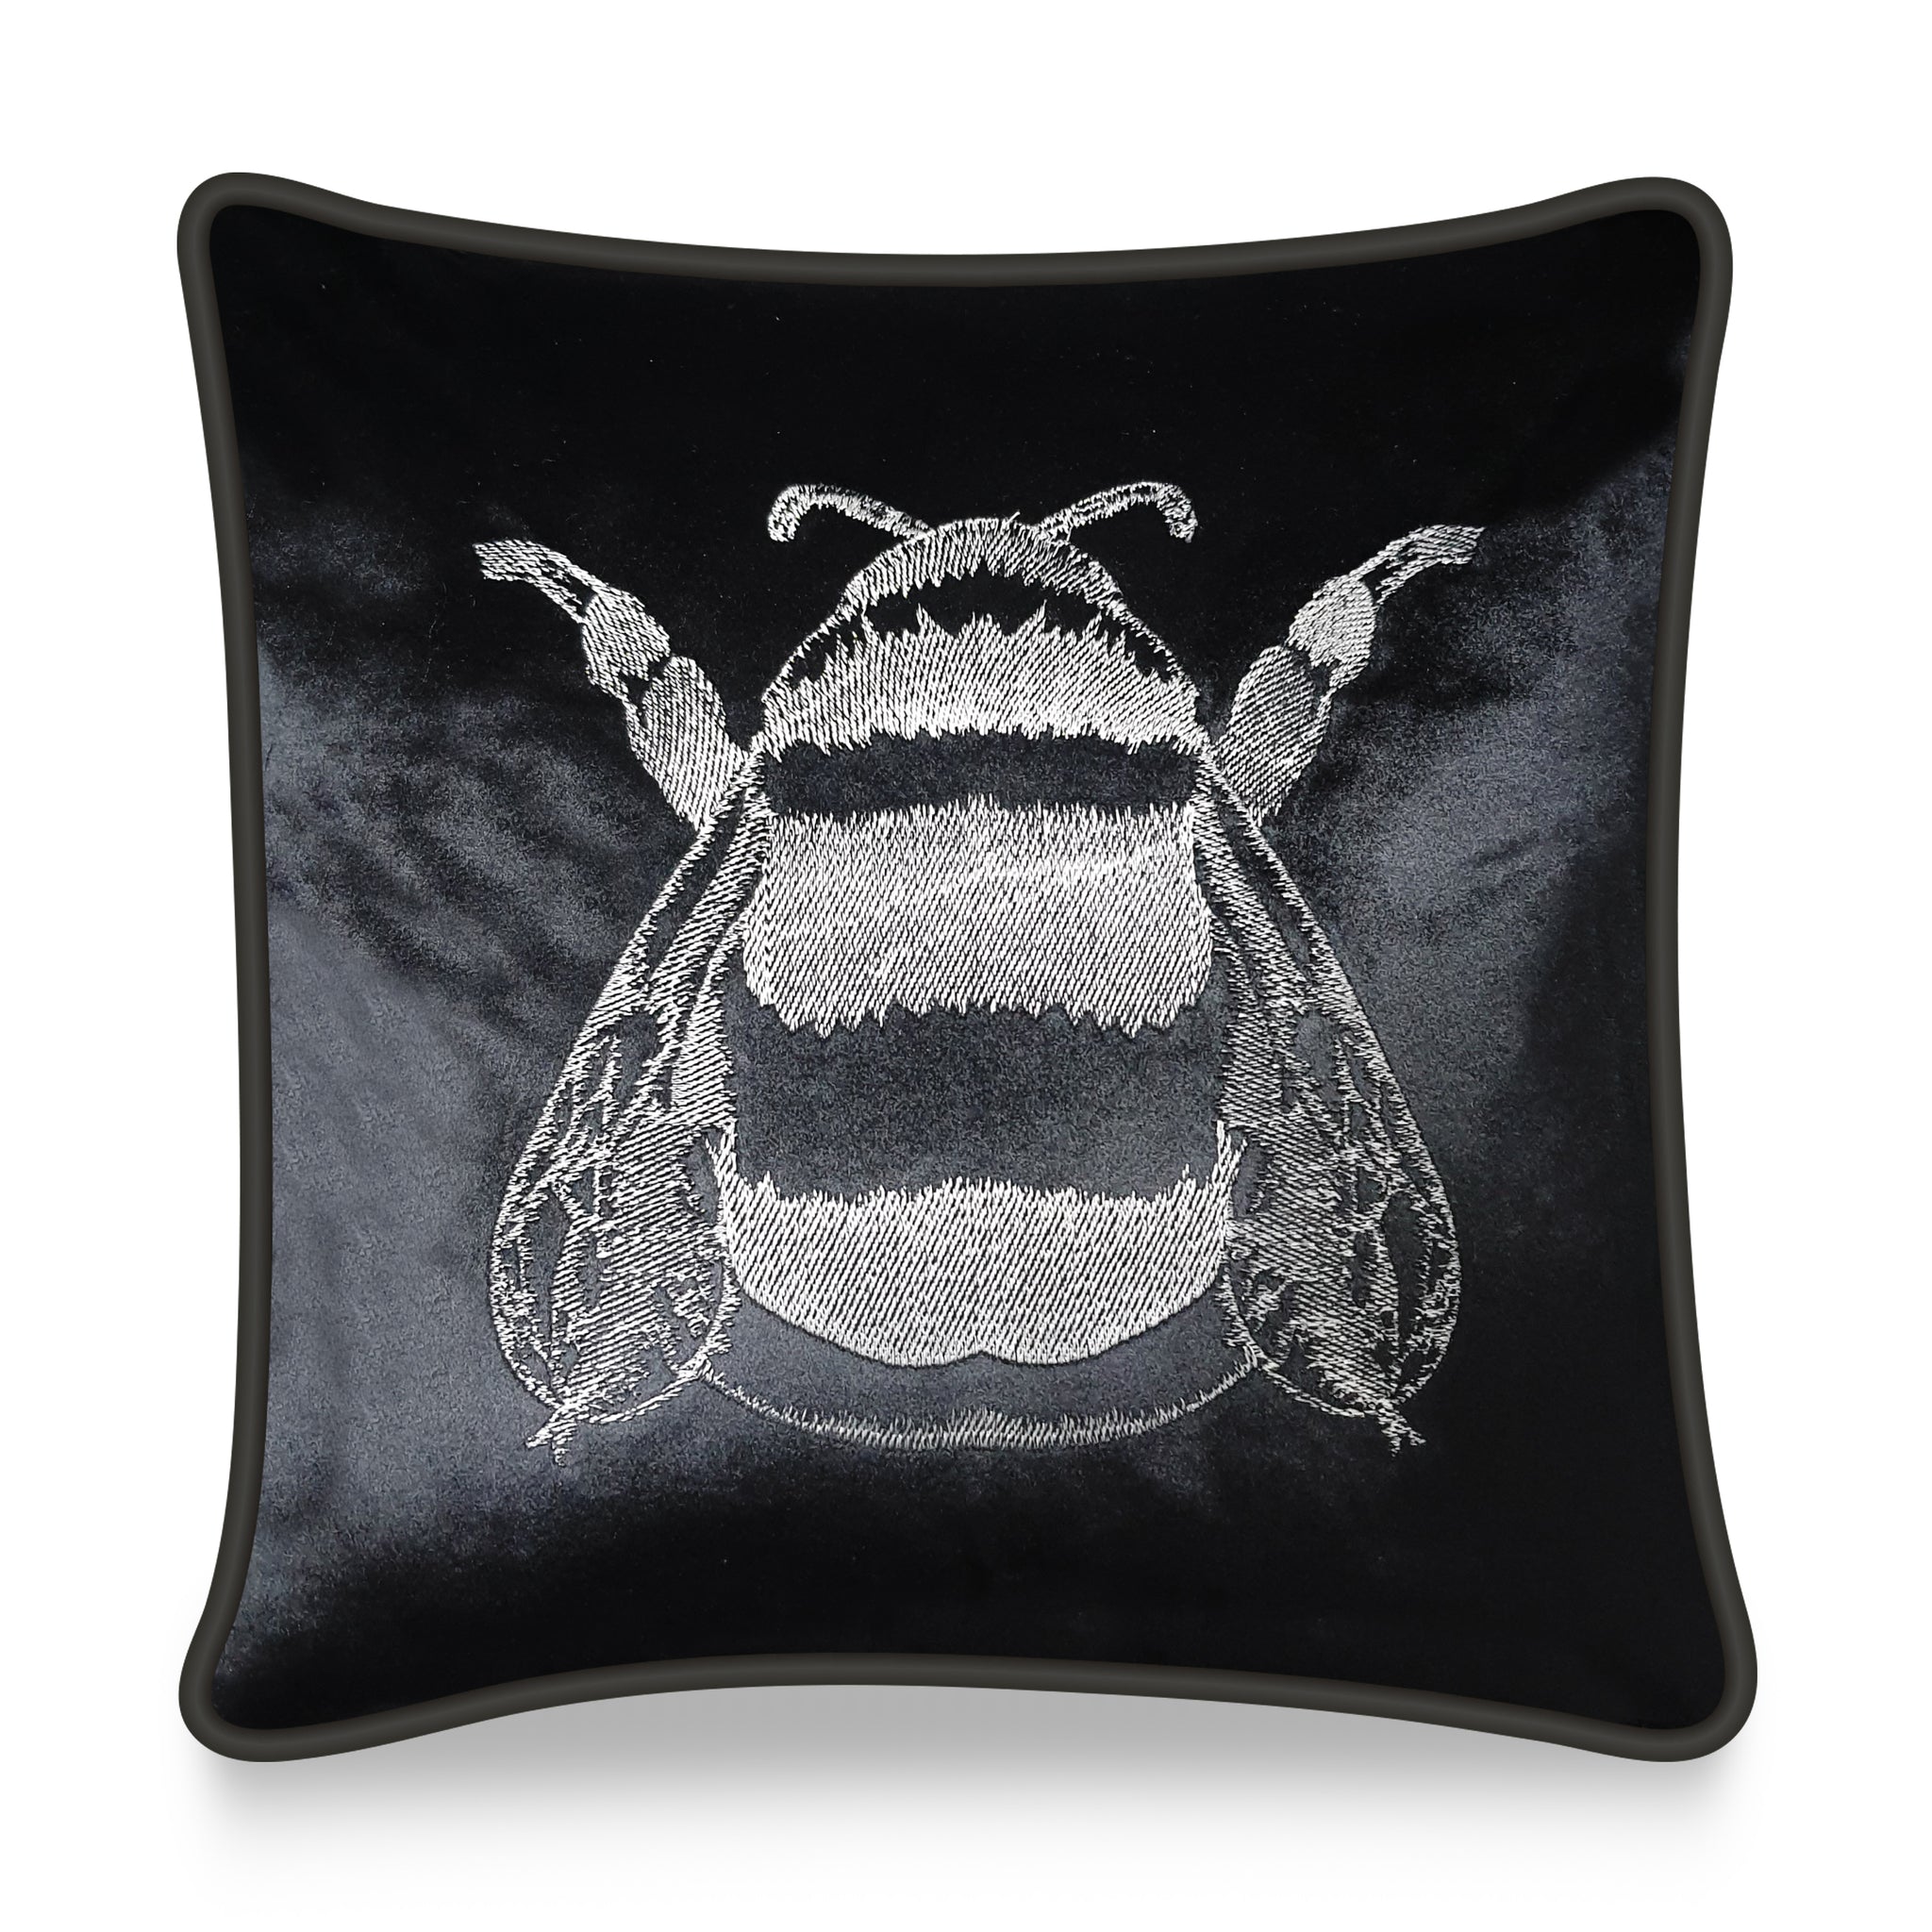  Velvet Cushion Cover Modern Fat Bee Embroidery Decorative Pillowcase Home Decor Throw Pillow for Sofa Chair Living Room 45x45 cm 